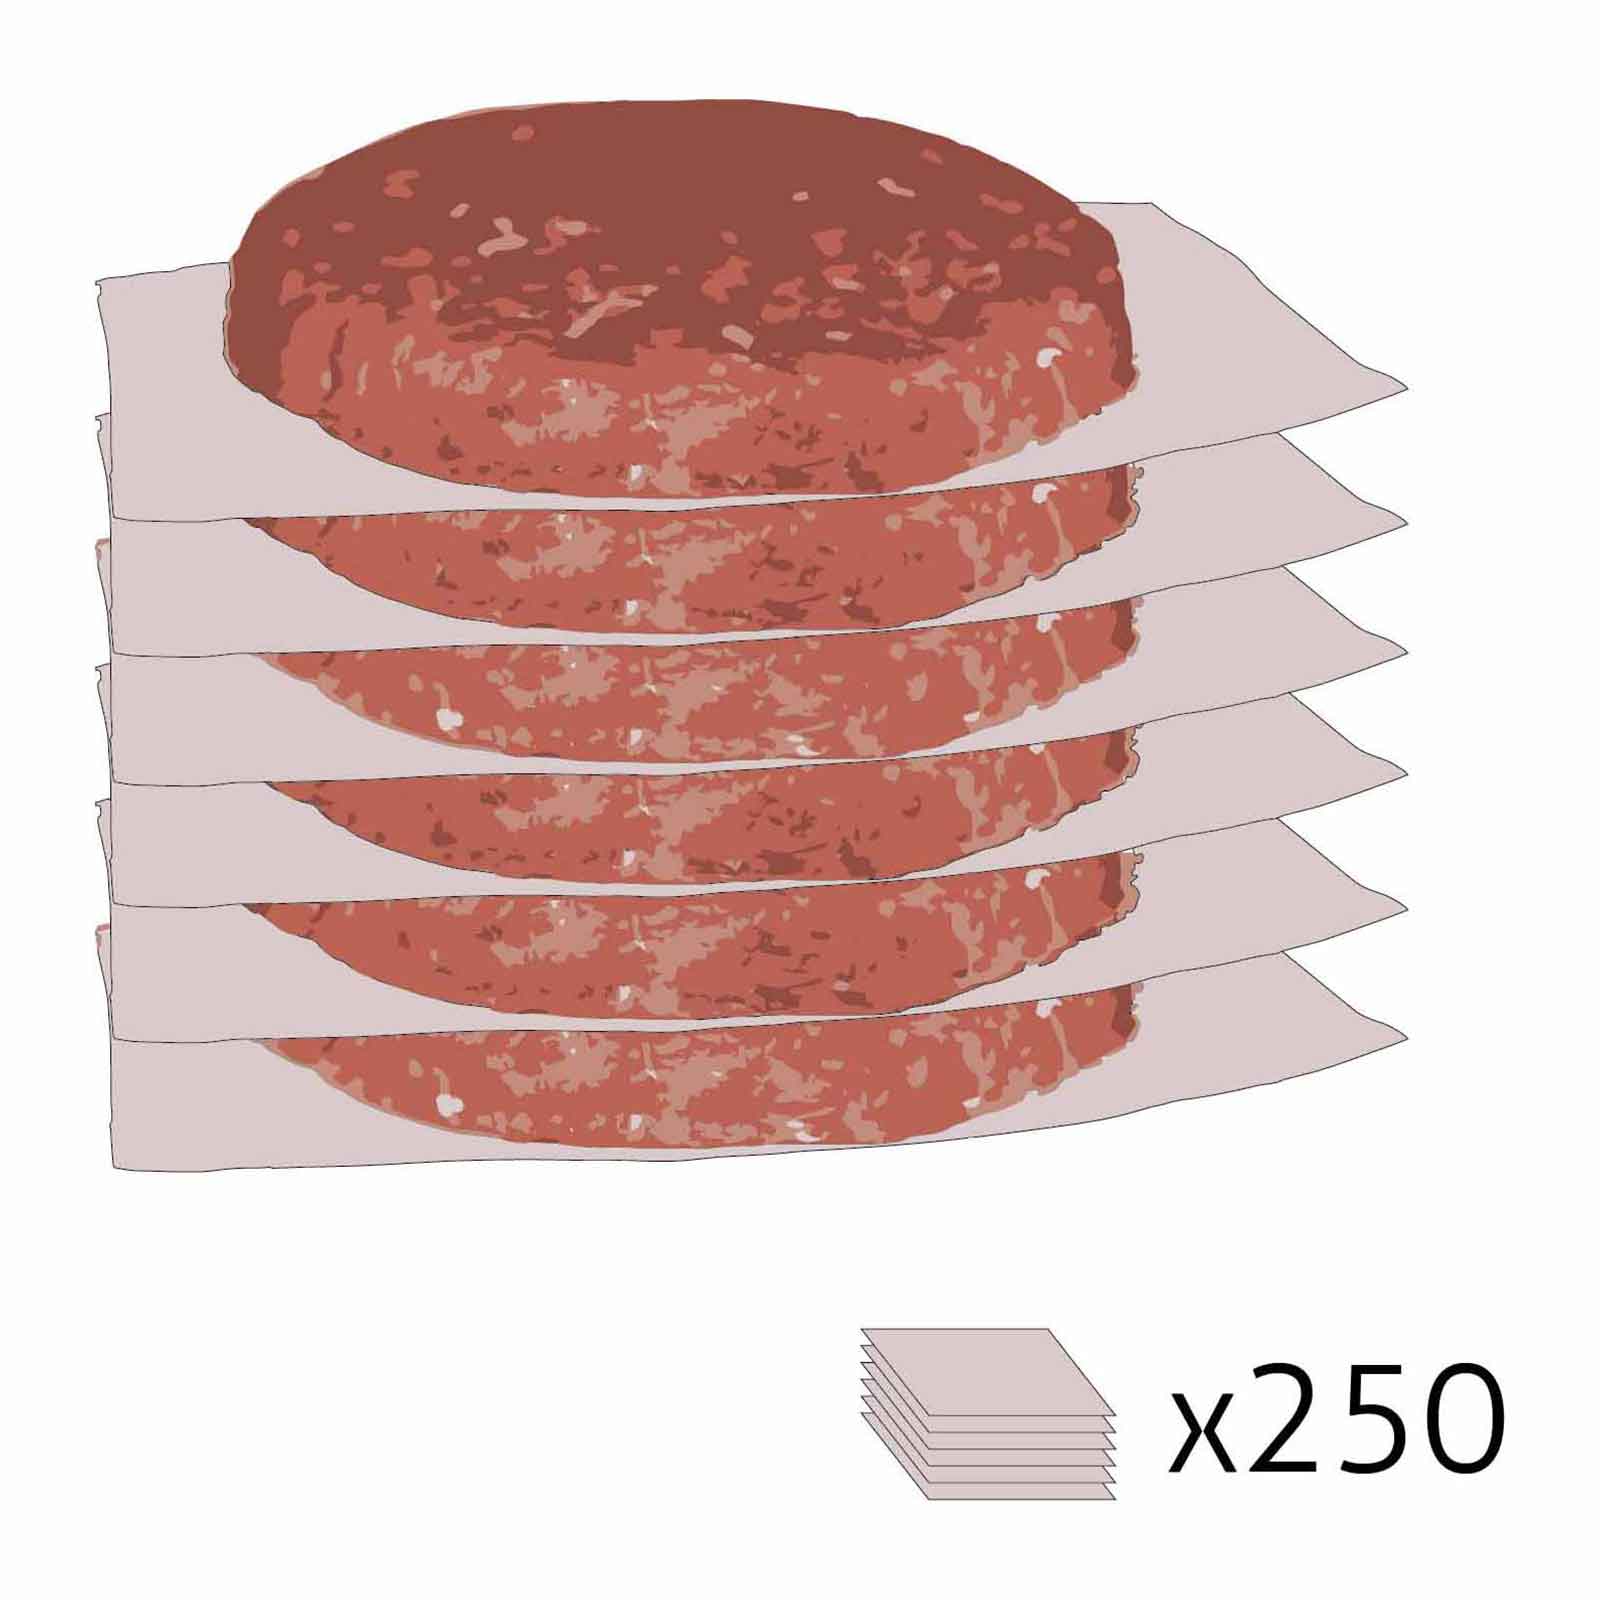 Paper Interlocks For Burgers - 250